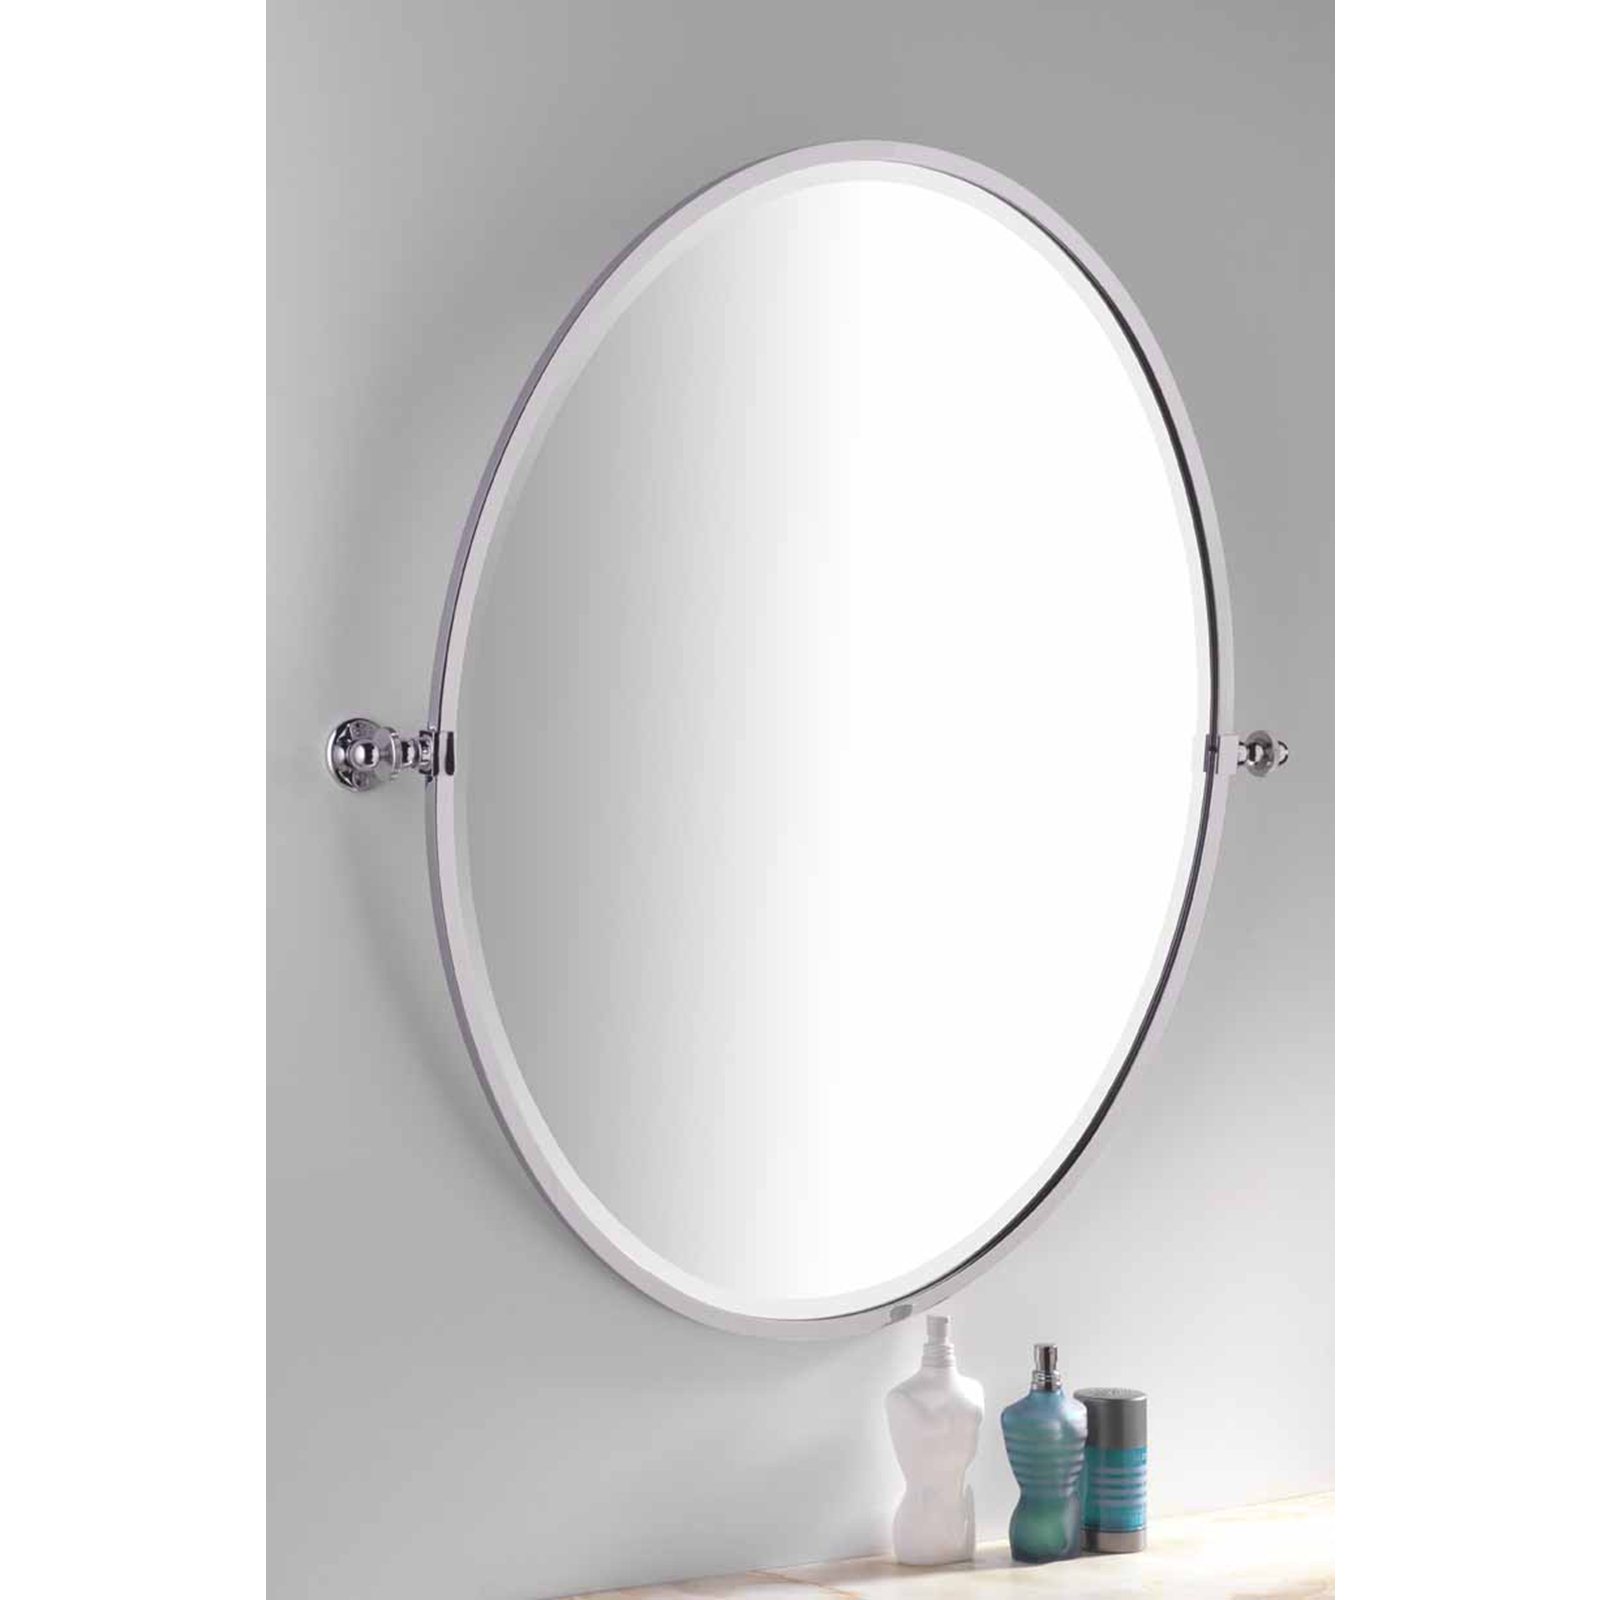 Handmade Bathroom Oval Framed Tilting, Tilting Wall Mirror Bathroom